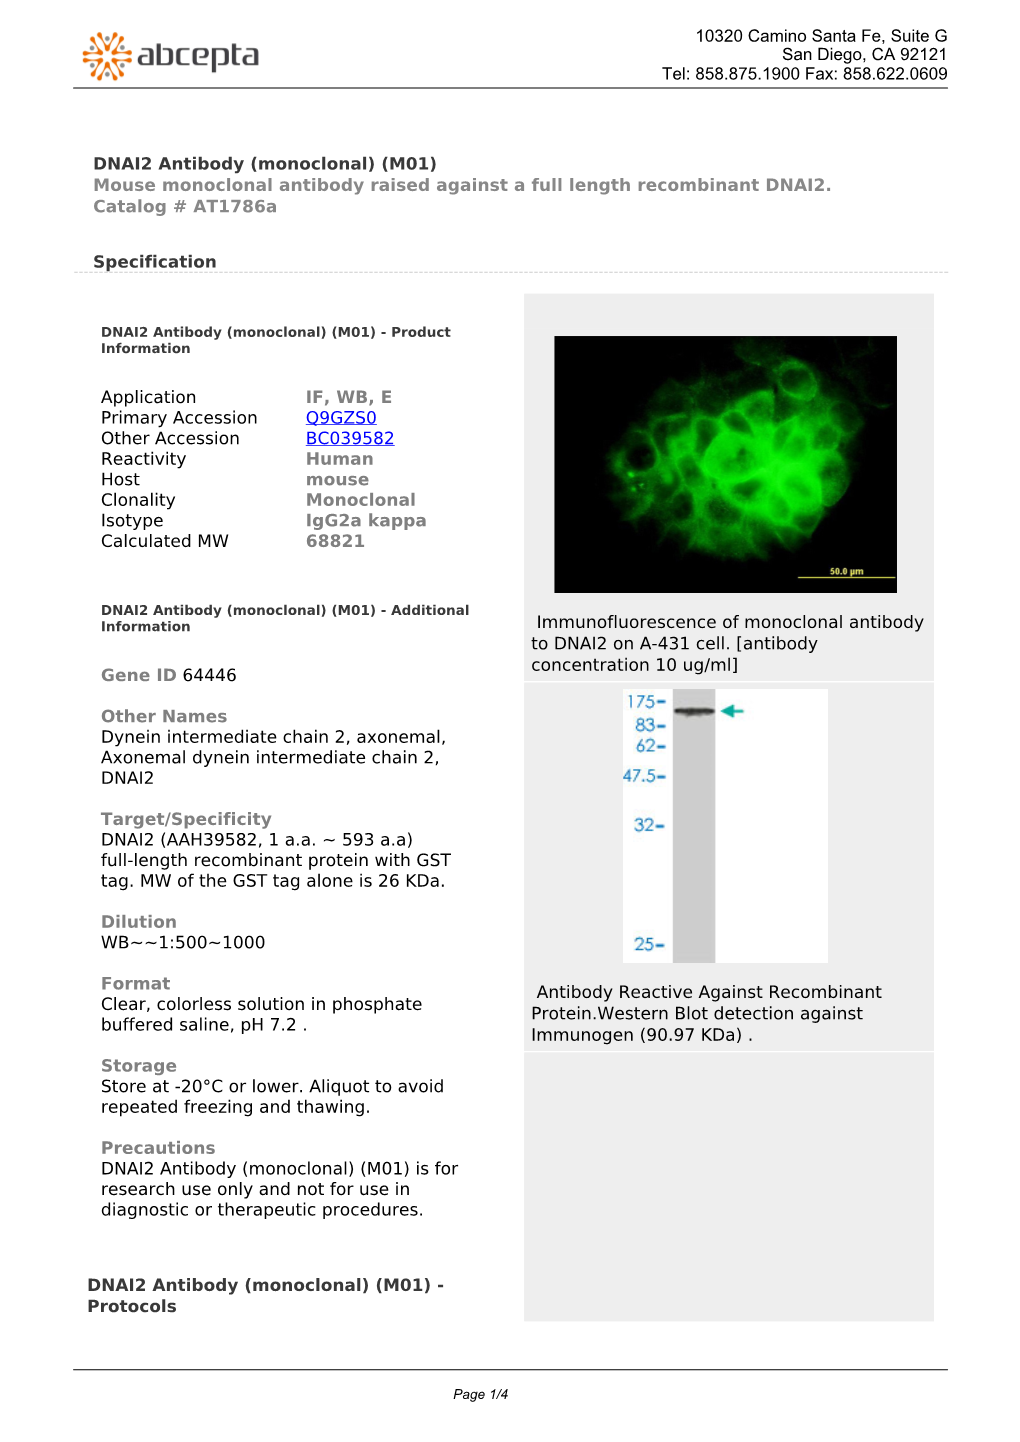 DNAI2 Antibody (Monoclonal) (M01) Mouse Monoclonal Antibody Raised Against a Full Length Recombinant DNAI2